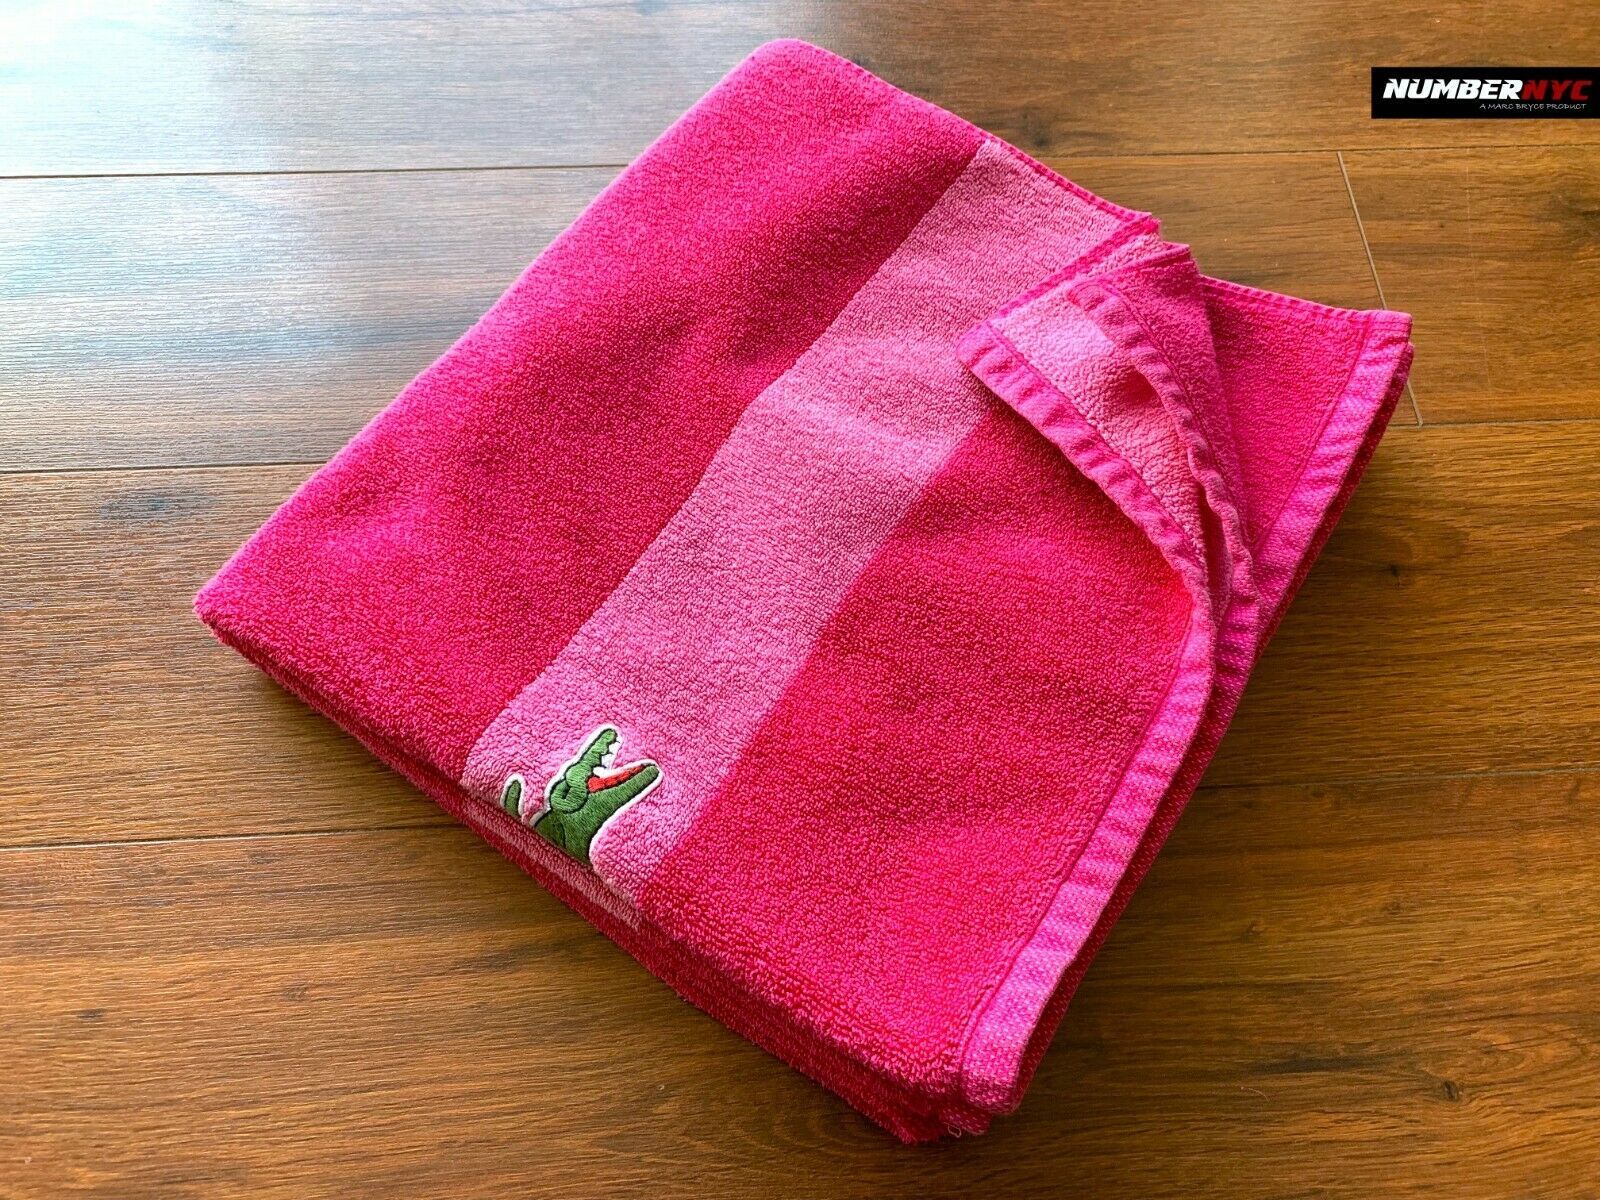 Lacoste Pink Rose Bath Beach Pool Towel 100% Cotton 52" Big Green Crocodile Logo - $28.70